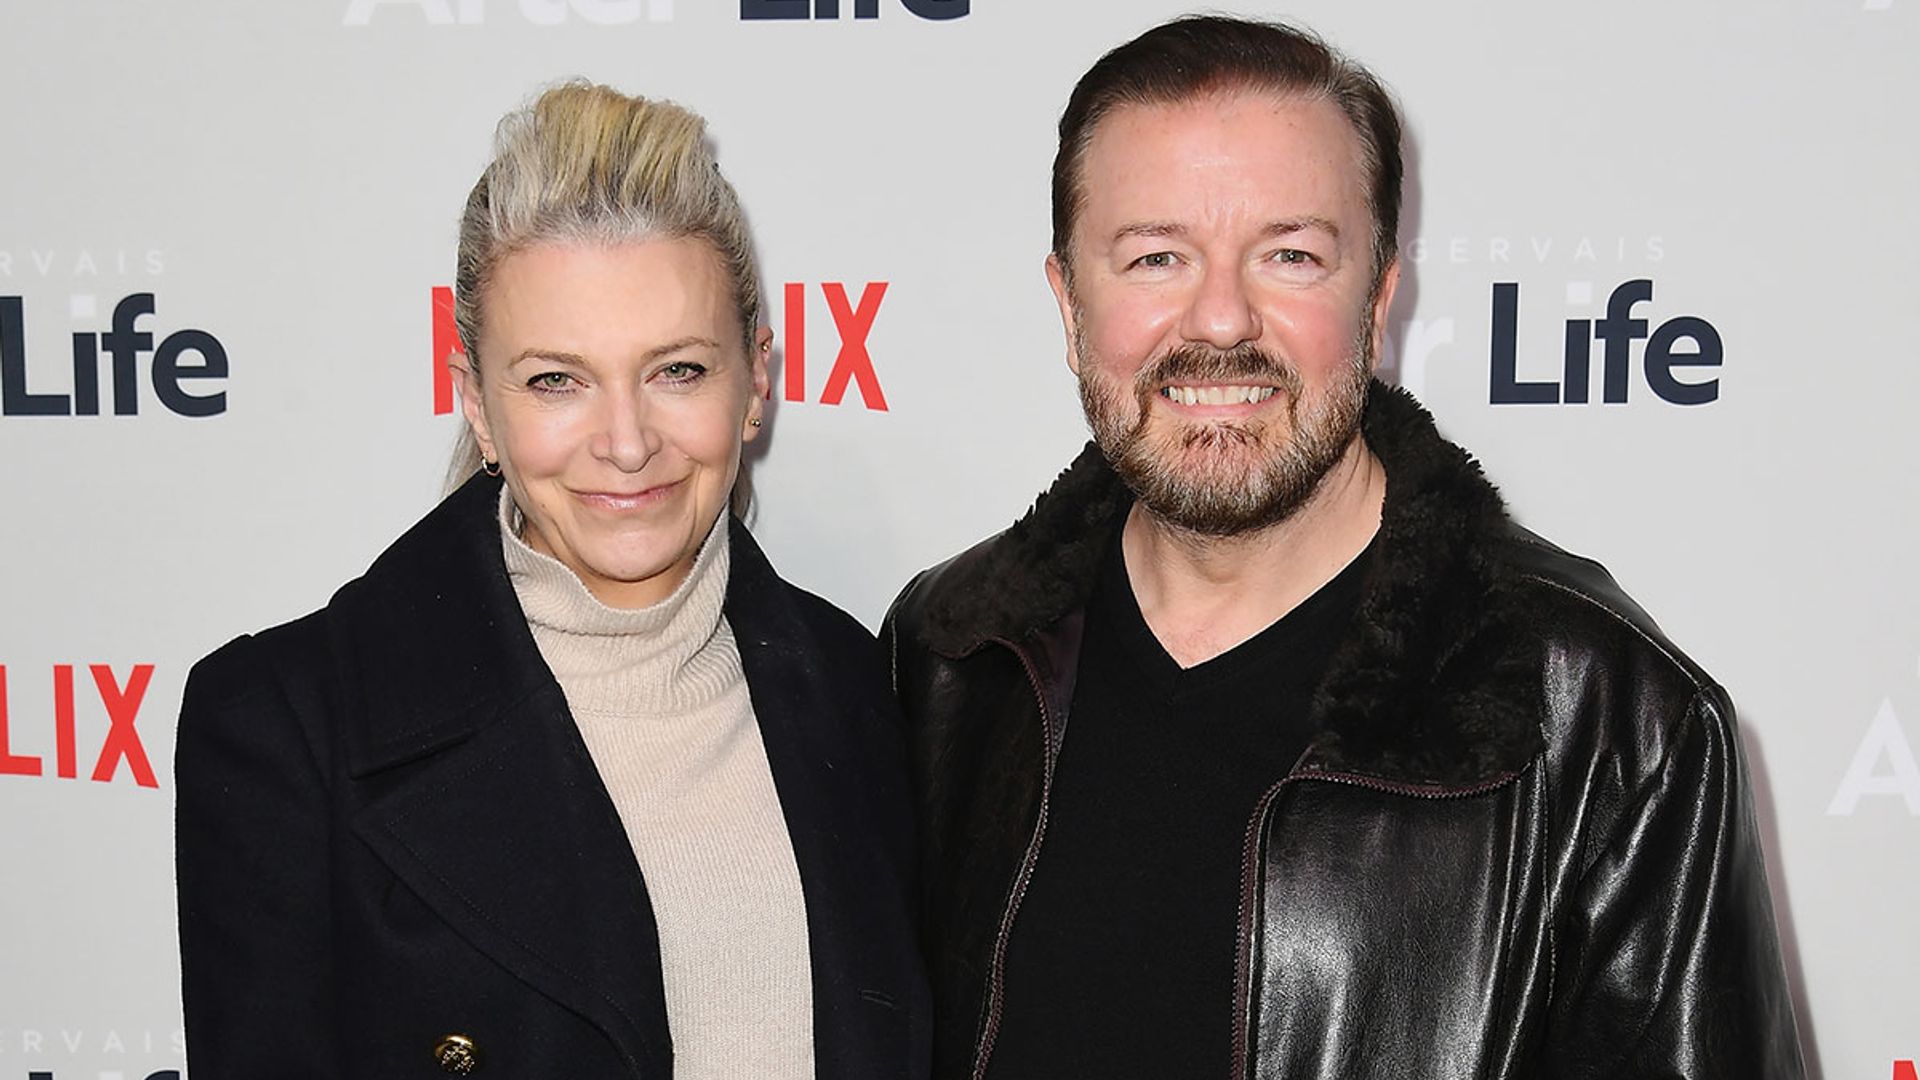 Ricky Gervais surprises fans after fostering feline 'little beauty'